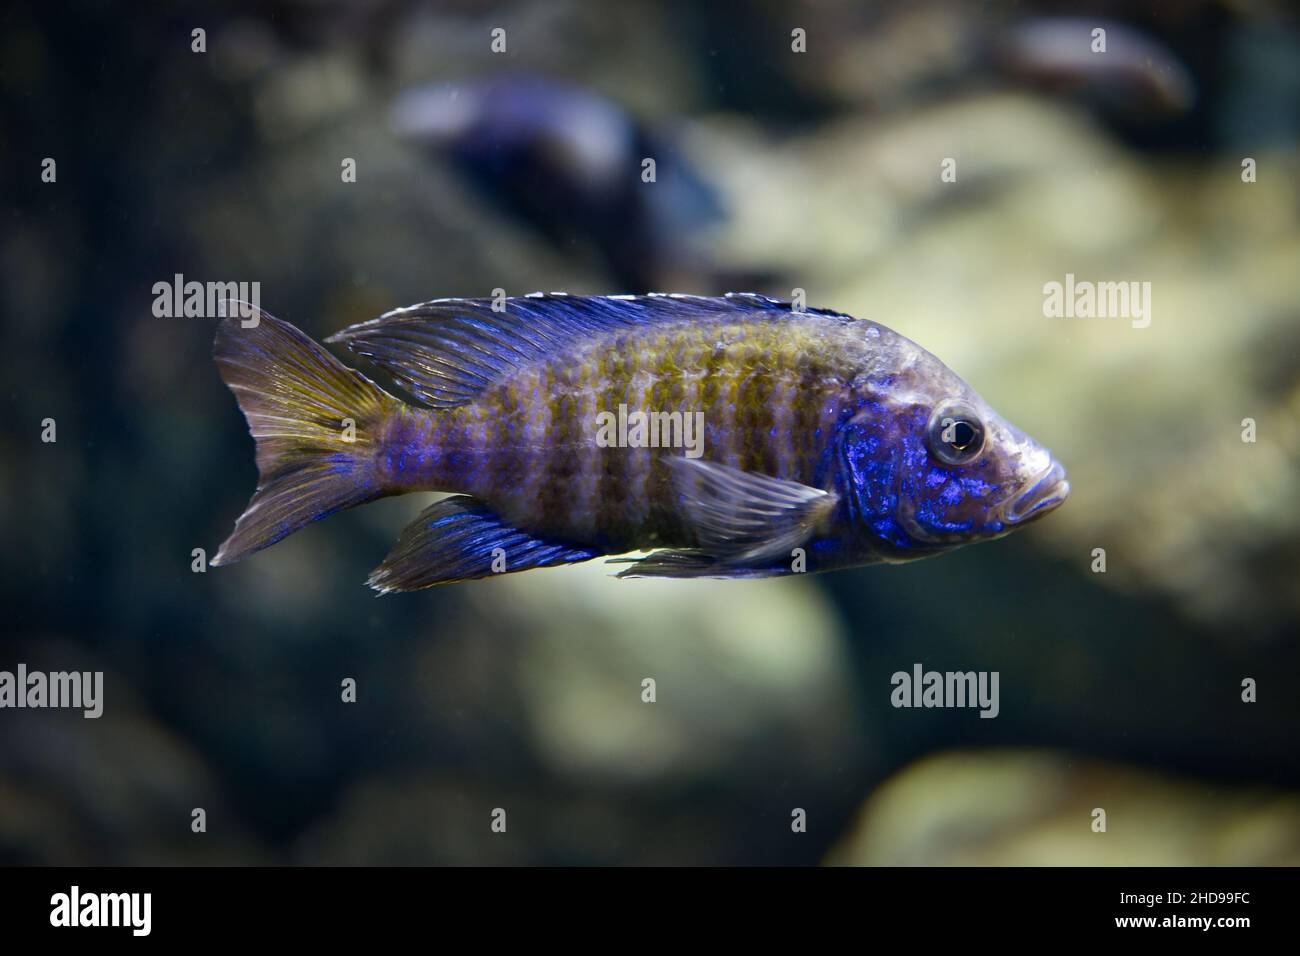 Blue striped aulonocara african fish swims in aquarium. Aulonocara is freshwater tropical fish. Stock Photo